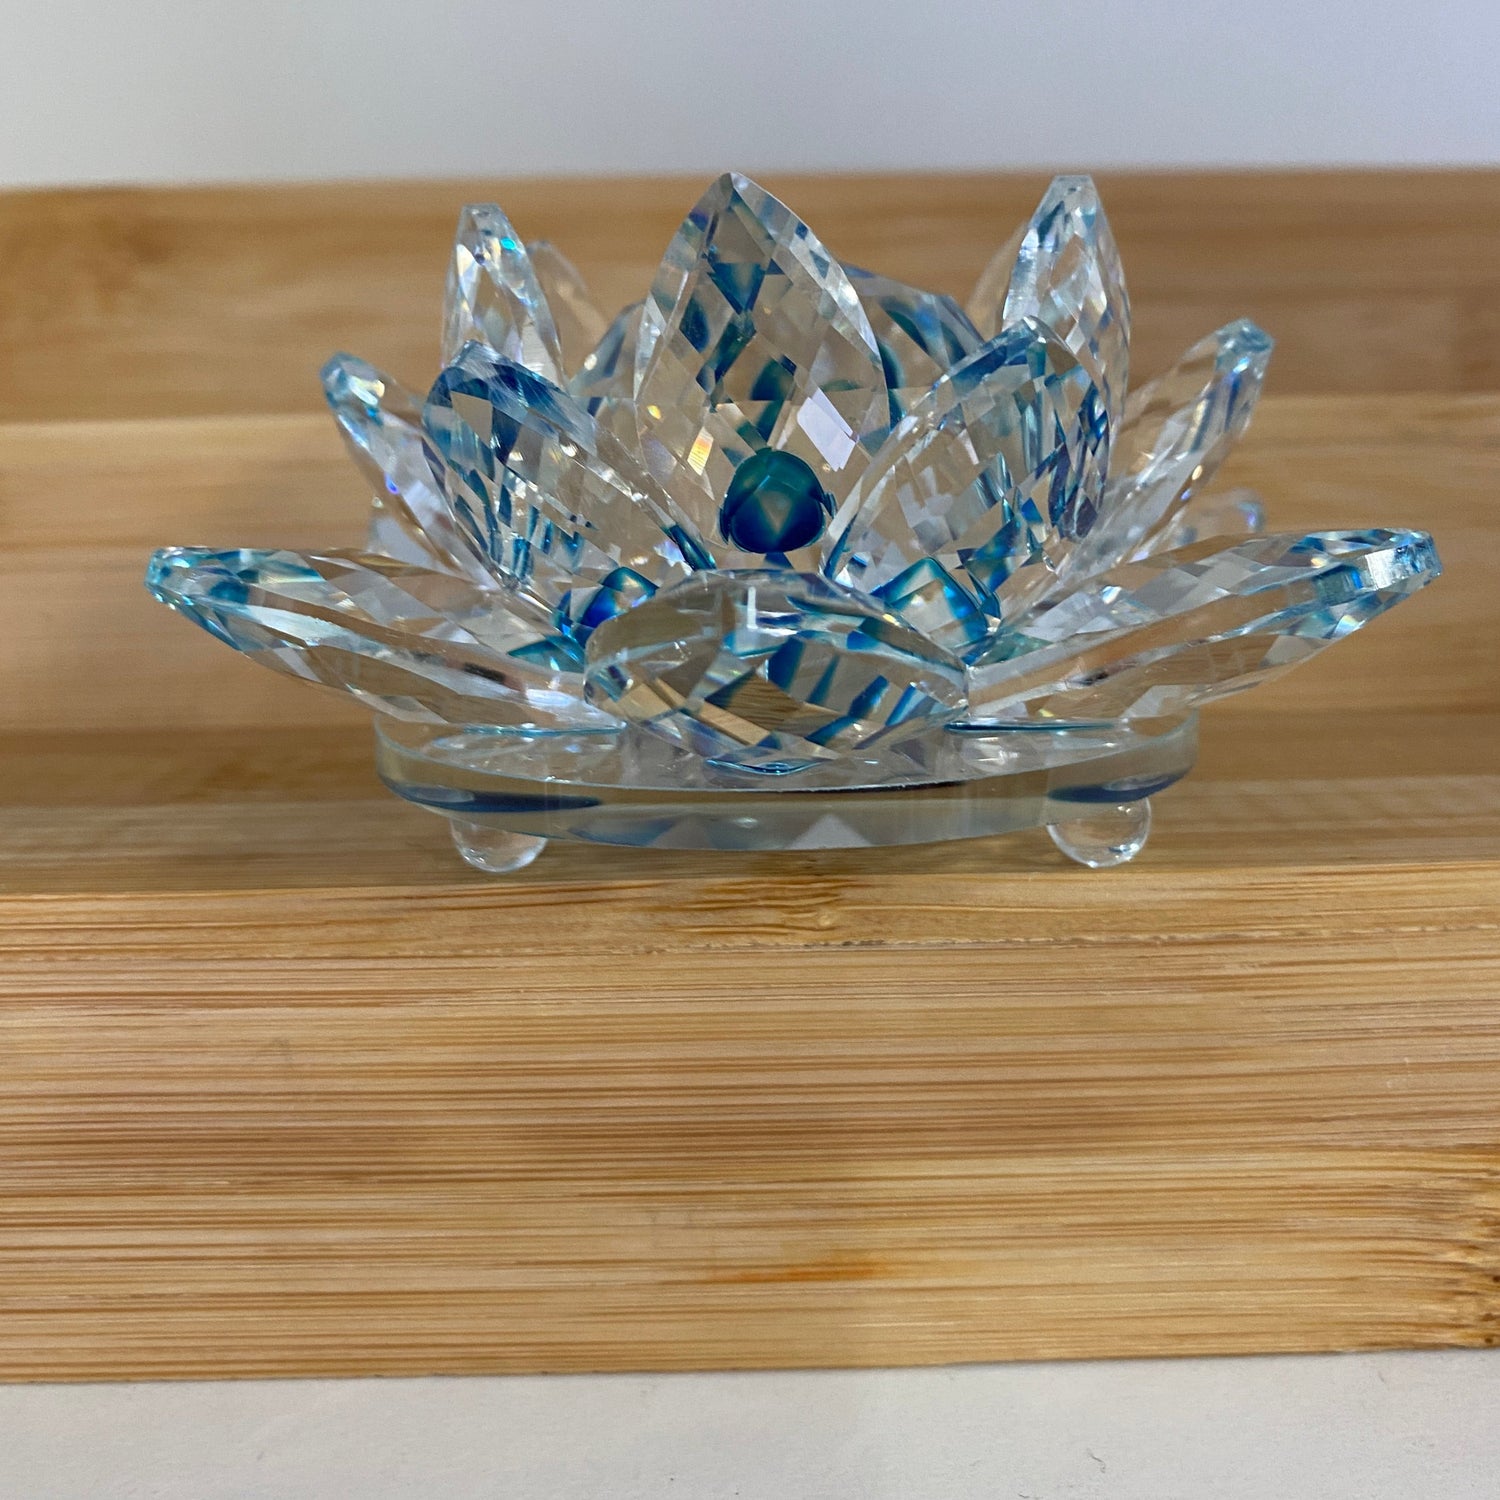 Feng Shui Crystal Lotus Flower - Blue